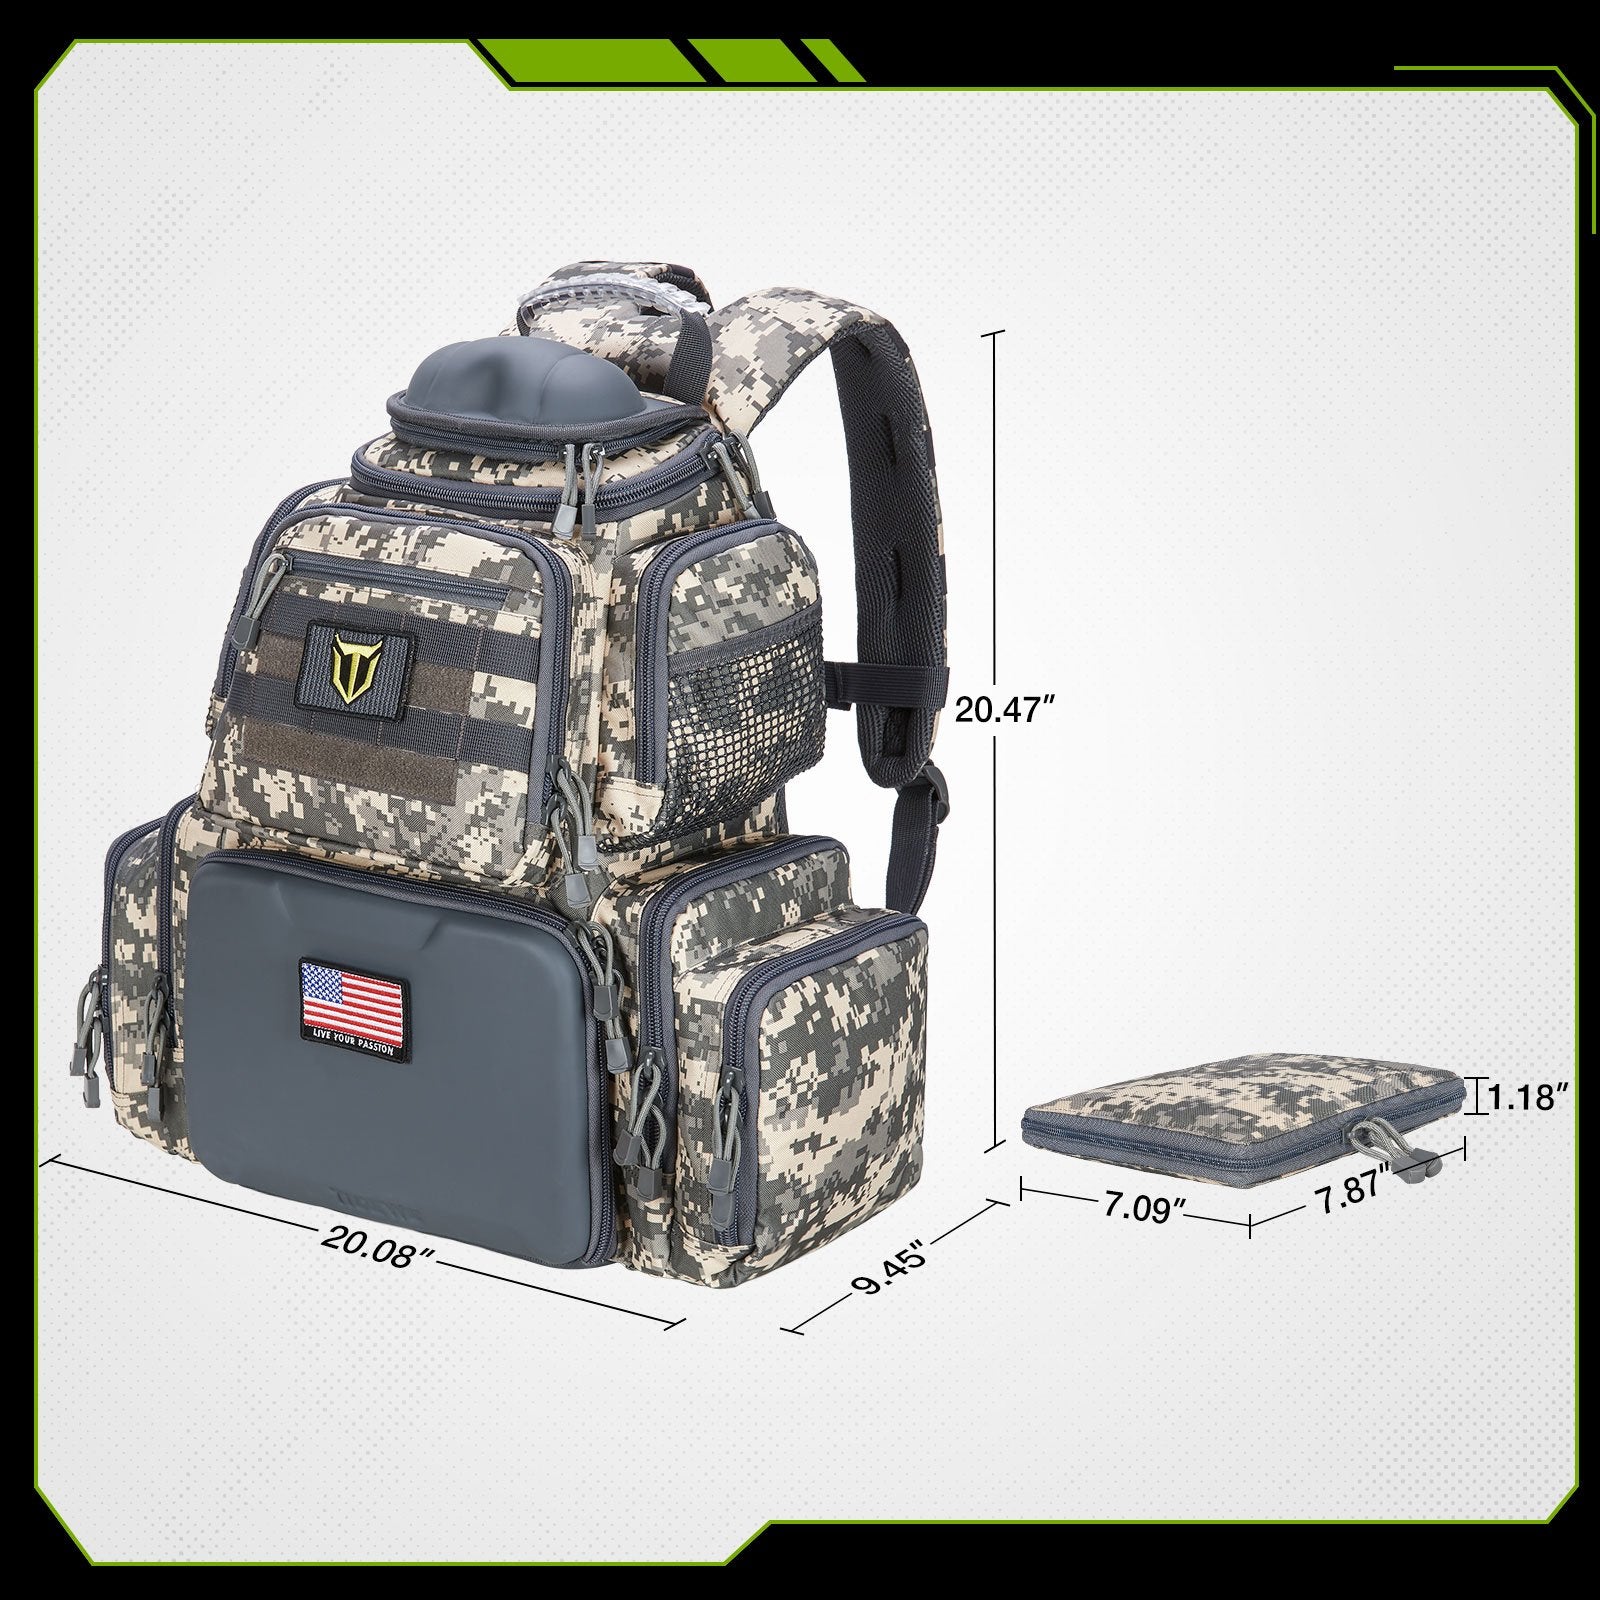 TideWe Tactical Range Backpack Bag Carrier Range Pack